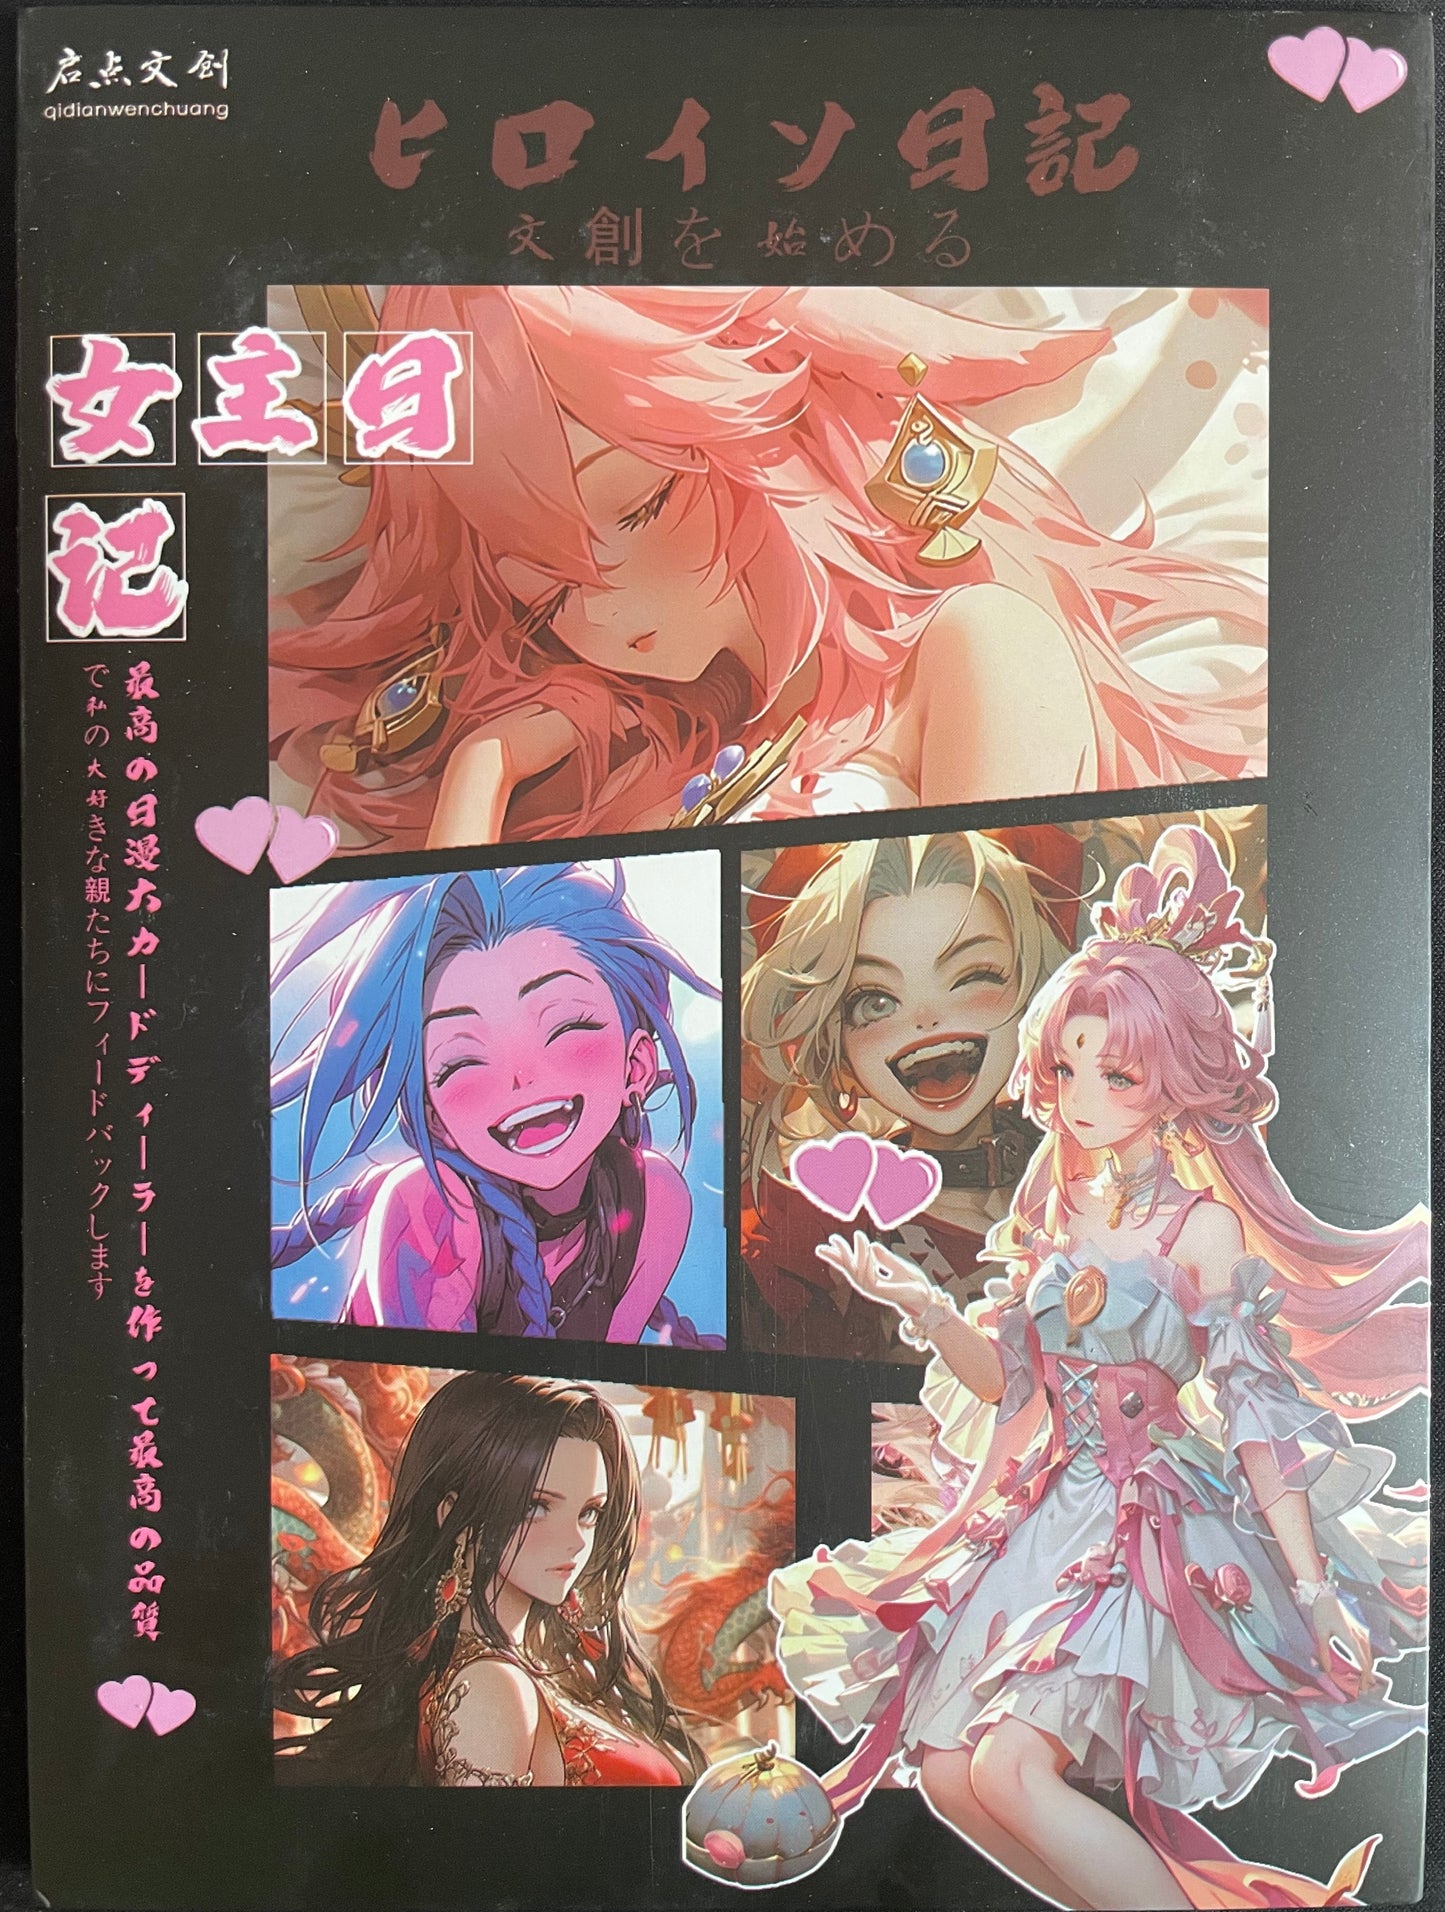 🔥 Main Lady's Journal Sealed Blind Box Goddess Story Anime 🔥